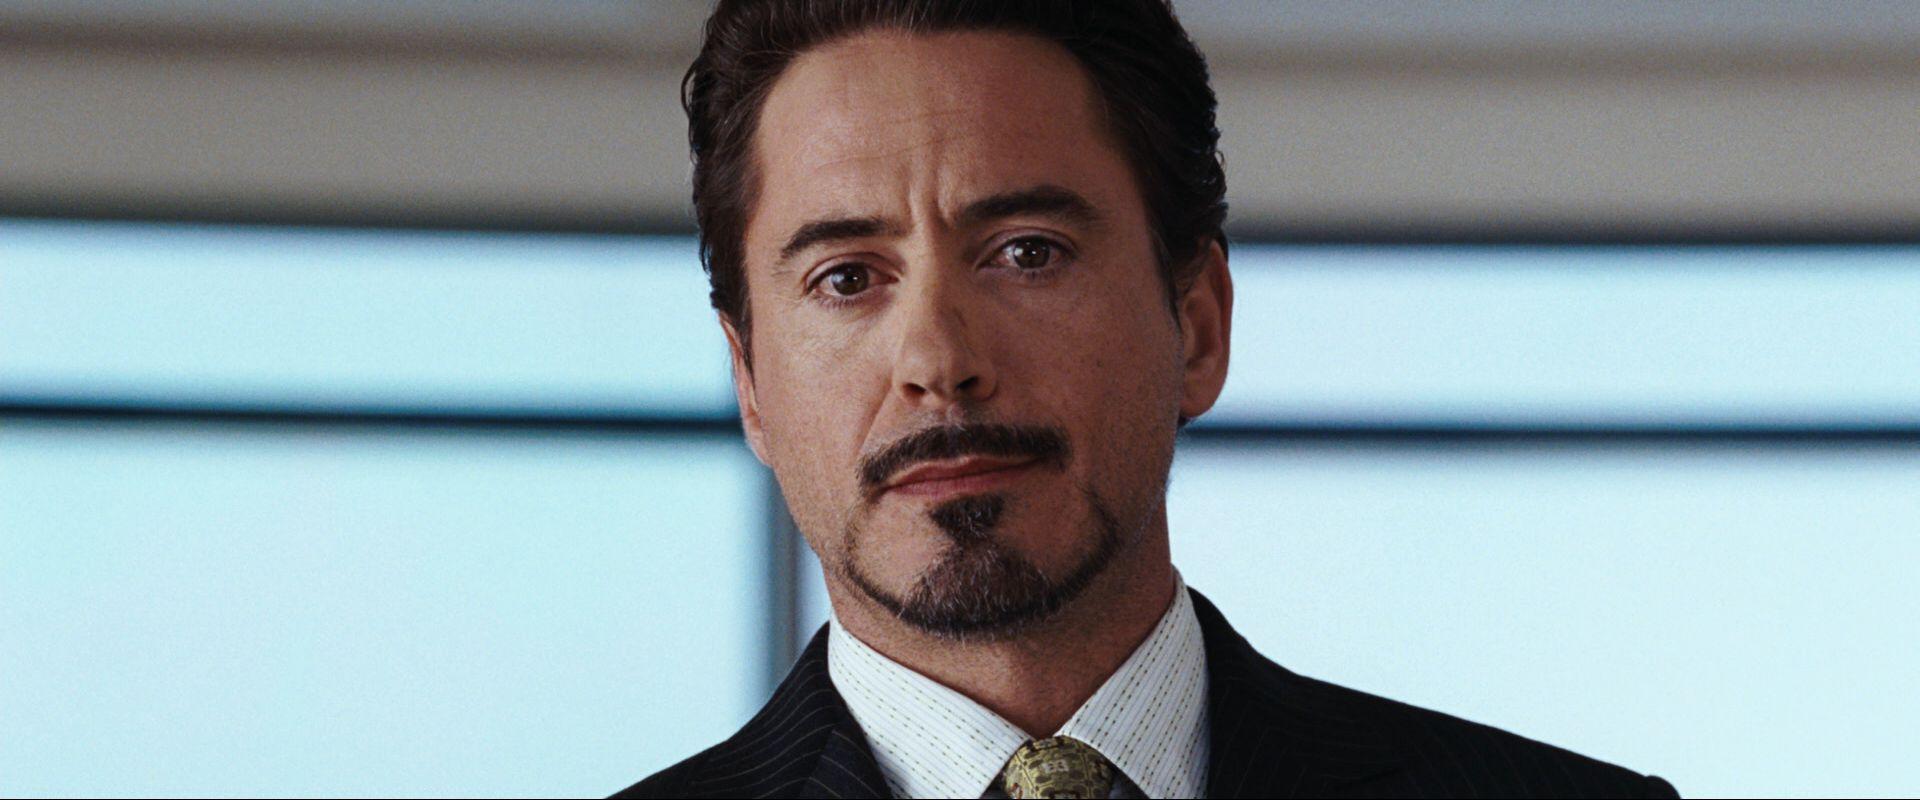 Picture of Tony Stark beard style, Great Iron Man pics